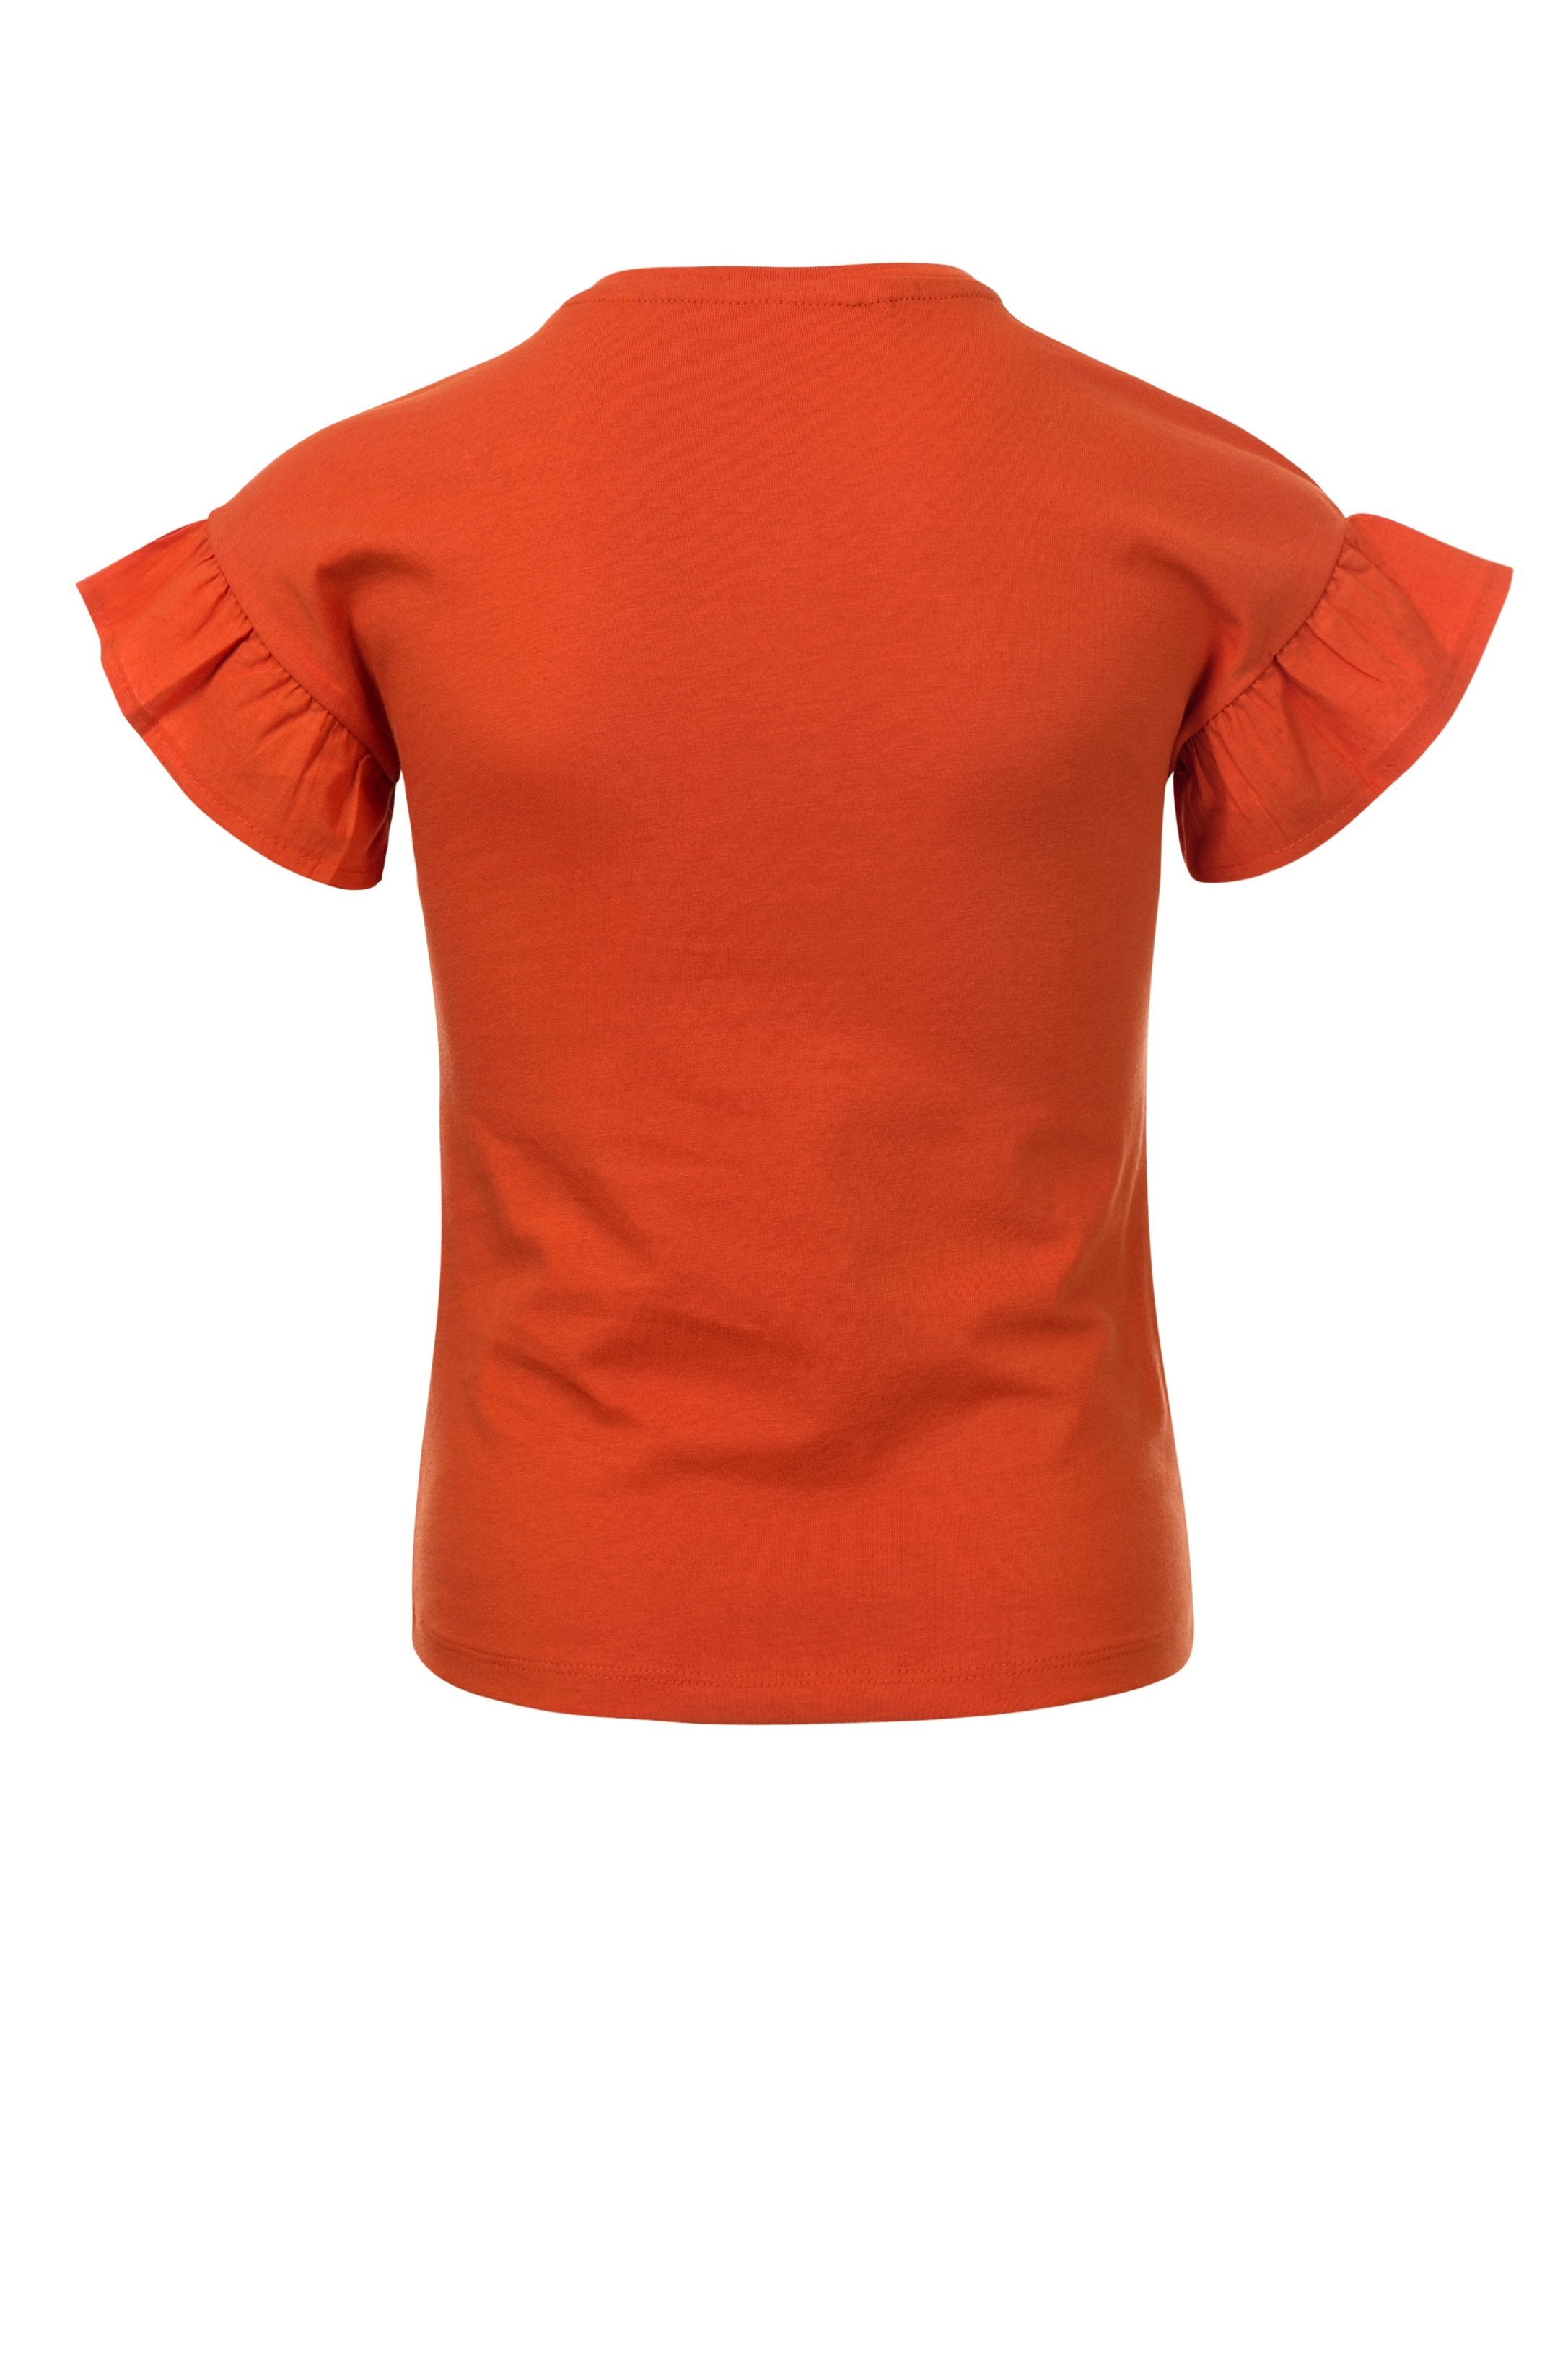 Meisjes T-Shirt Poplin Ruffle van Little Looxs in de kleur Rust in maat 128.